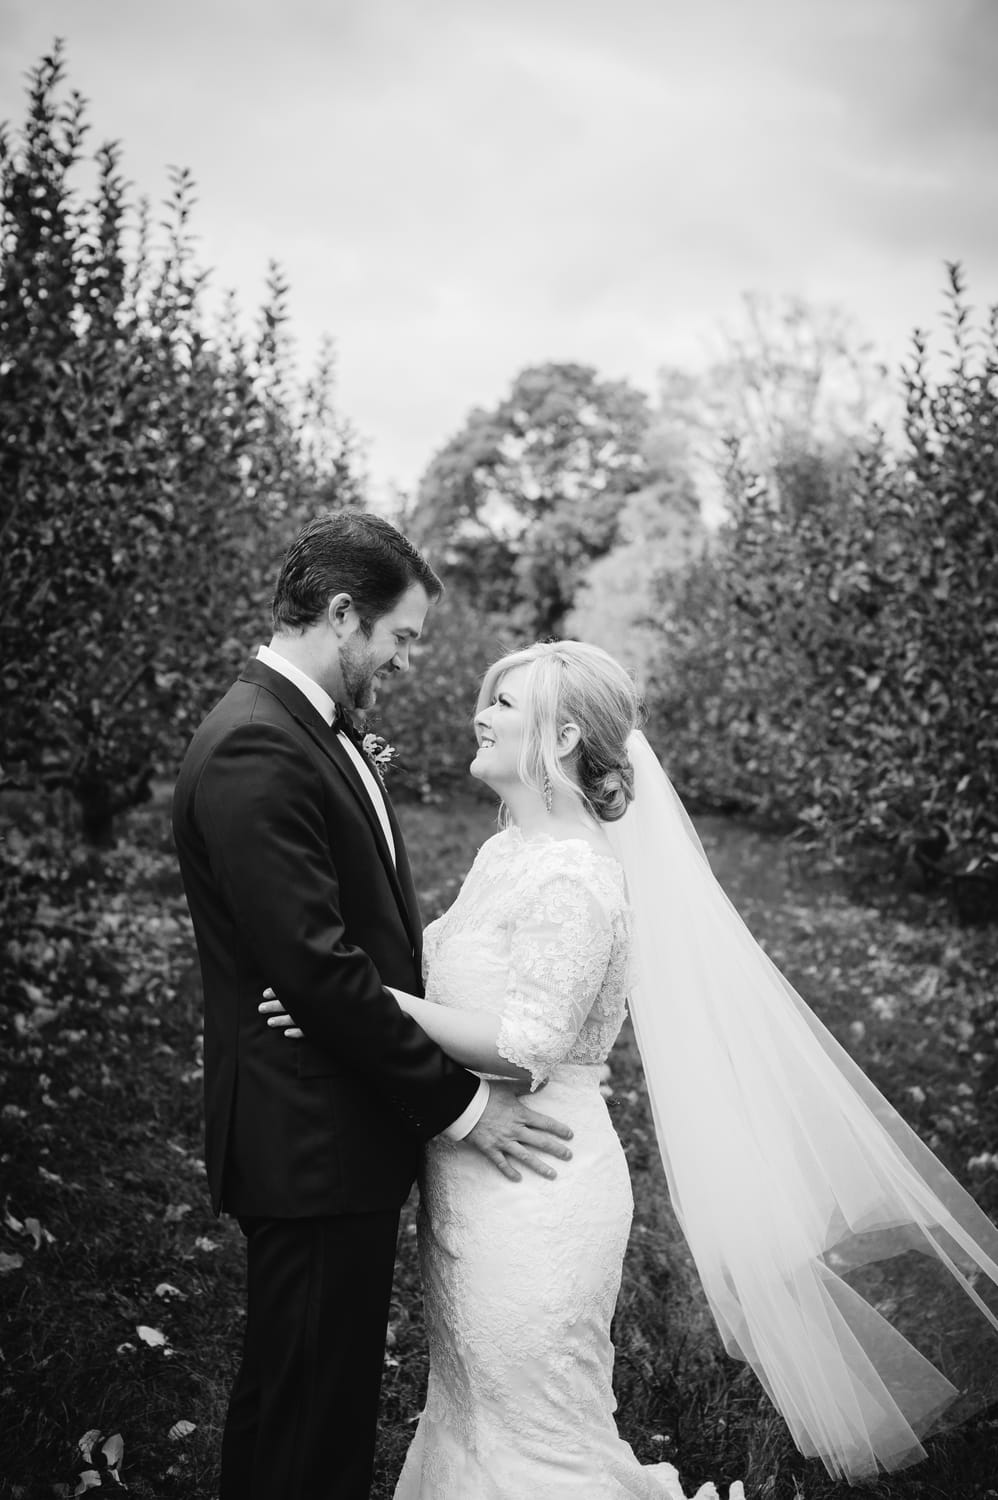 Quonquont Farm, New England Wedding, Orchard Wedding